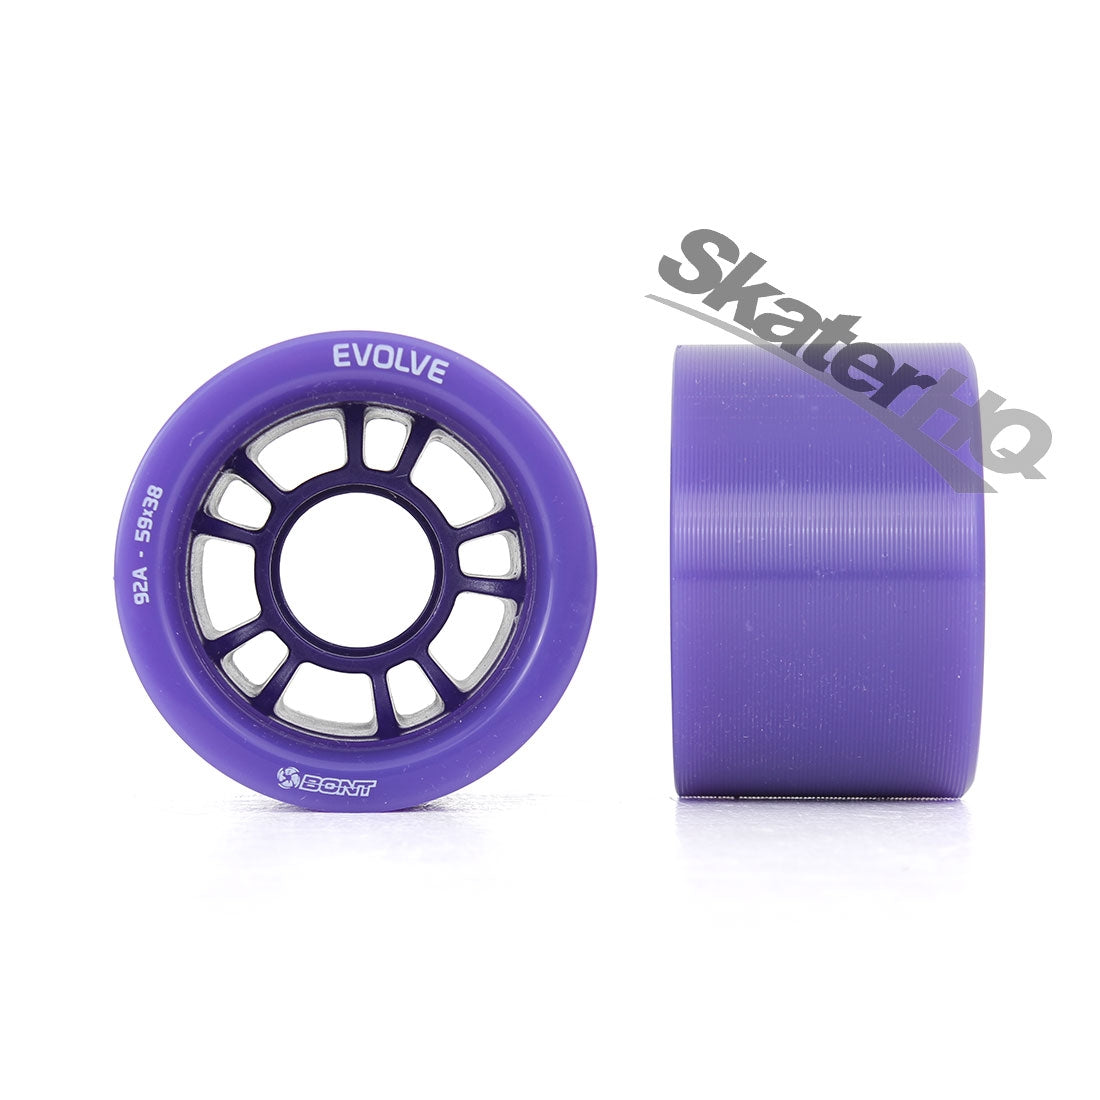 Bont Evolve Derby 59x38mm 92a 4pk - Purple Roller Skate Wheels